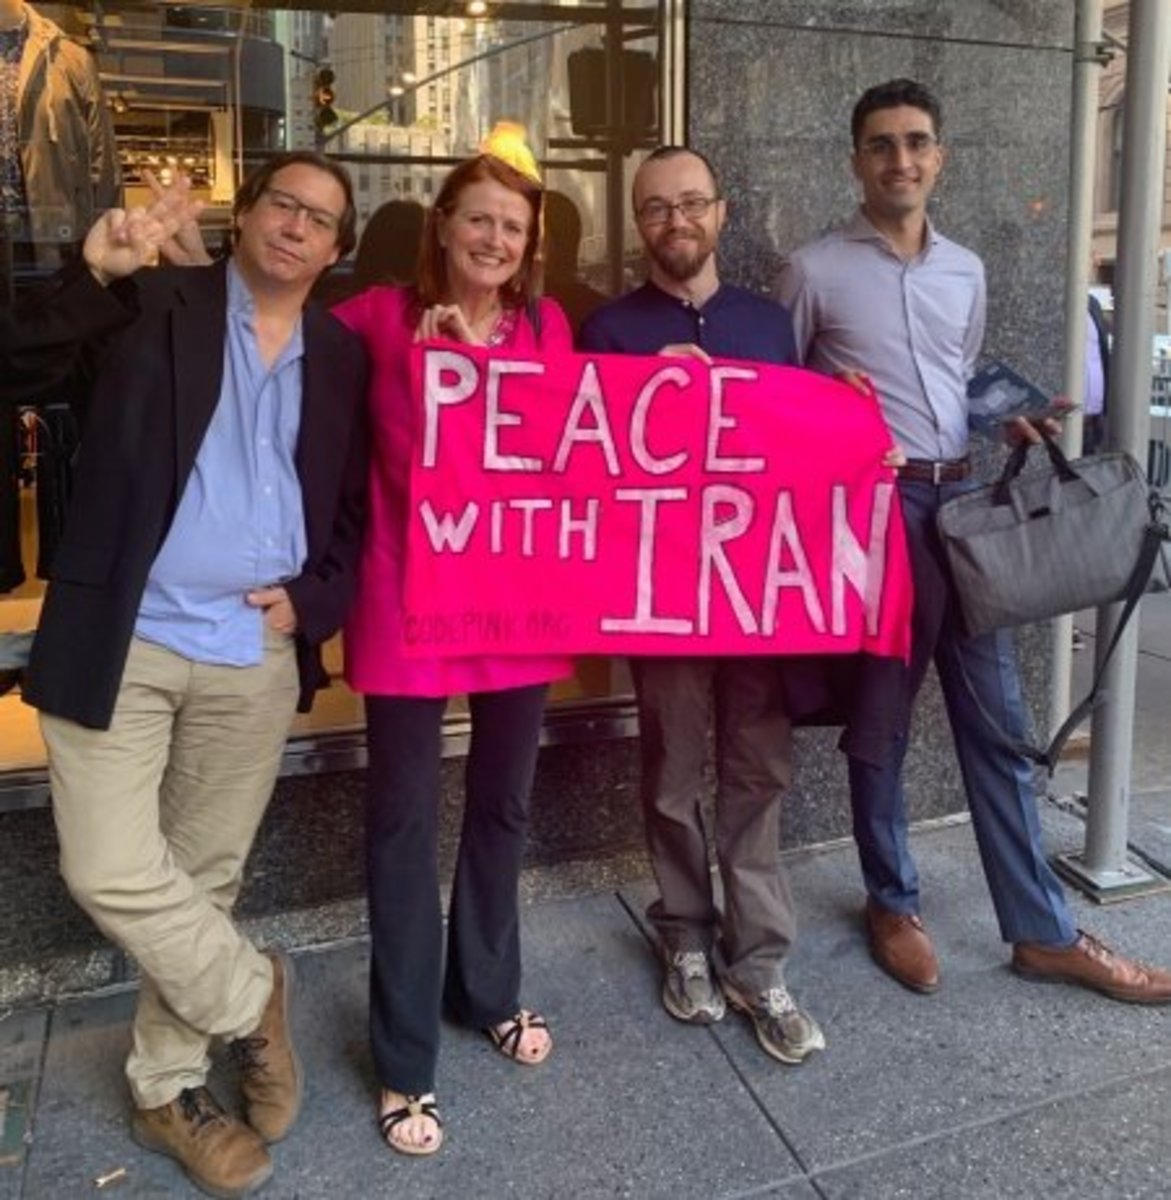 Sanctions Against Iran